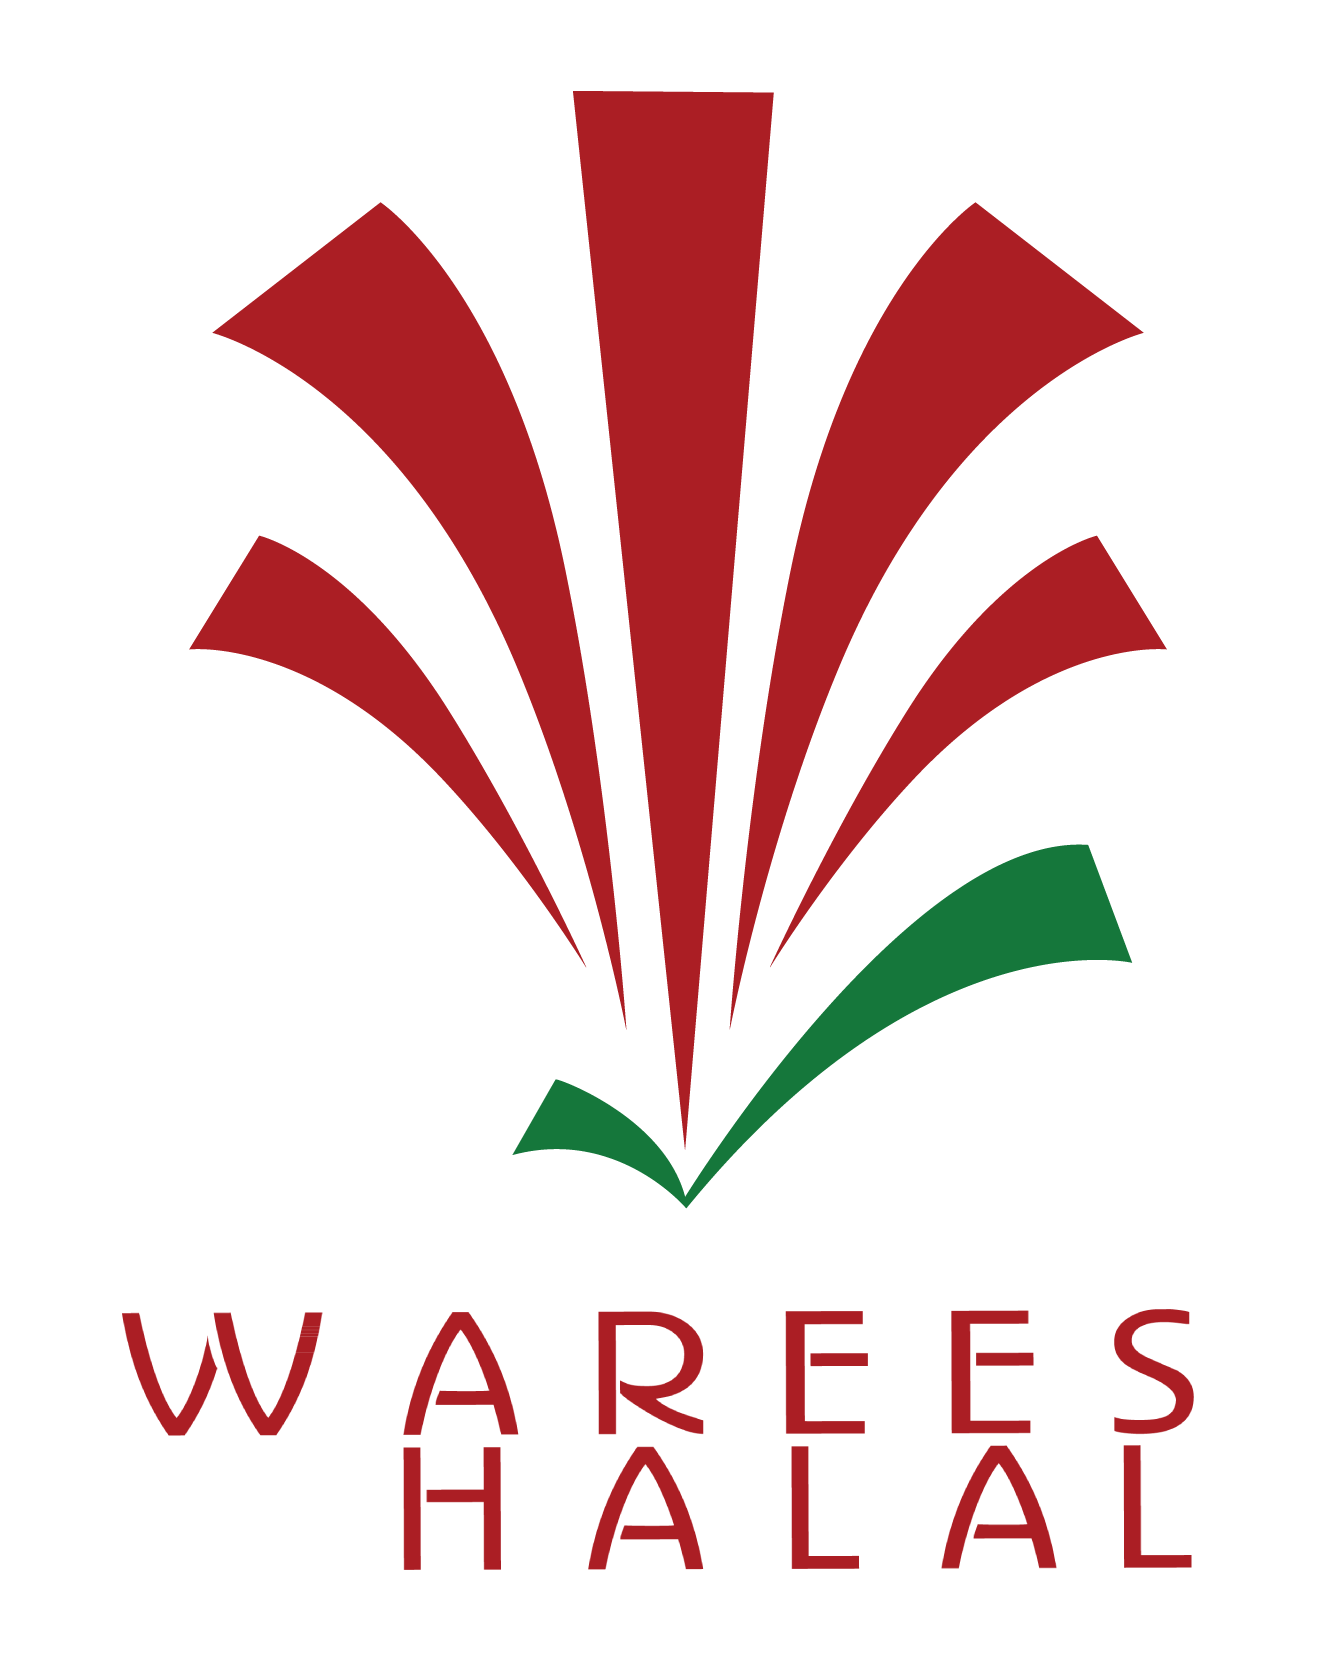 Warees Halal Limited Logo